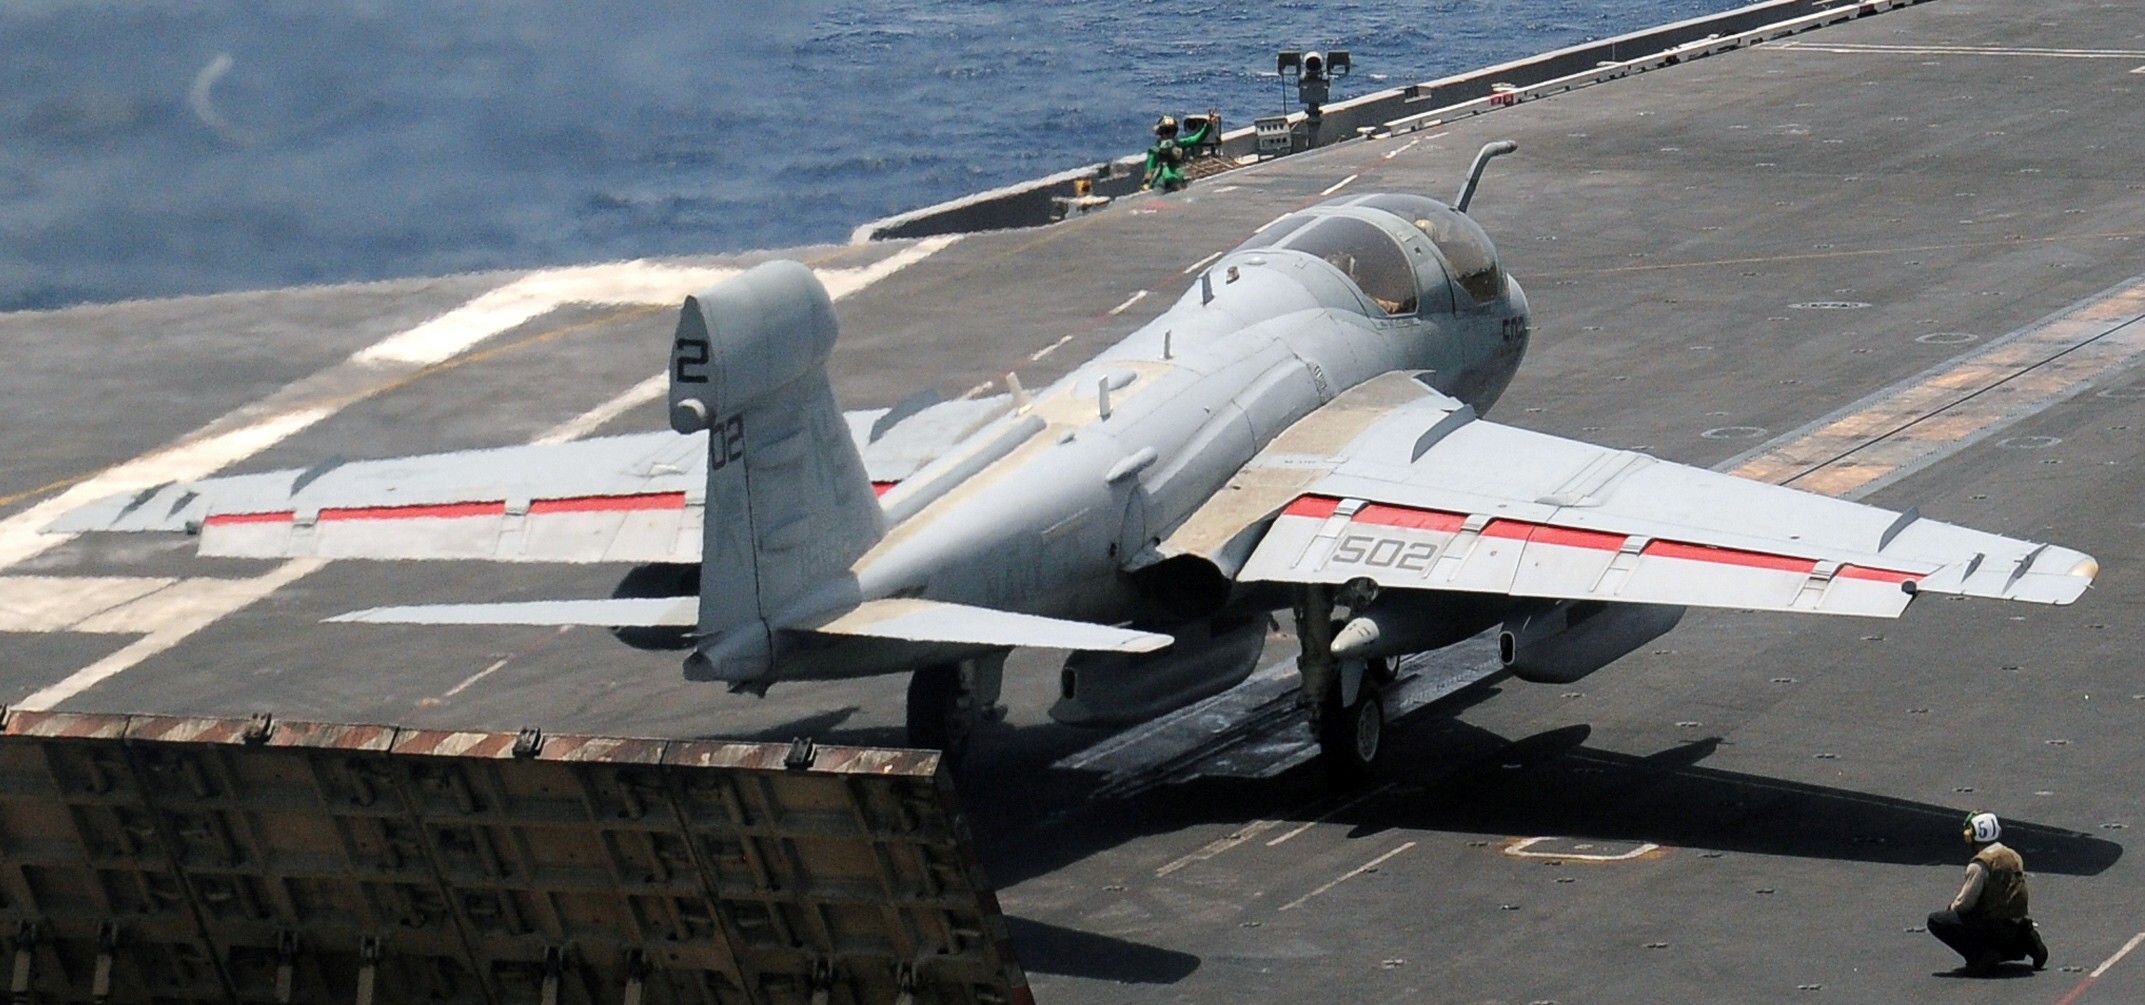 vaq-131 lancers electronic attack squadron vaqron us navy grumman ea-6b prowler carrier air wing cvw-2 uss abraham lincoln cvn-72 16